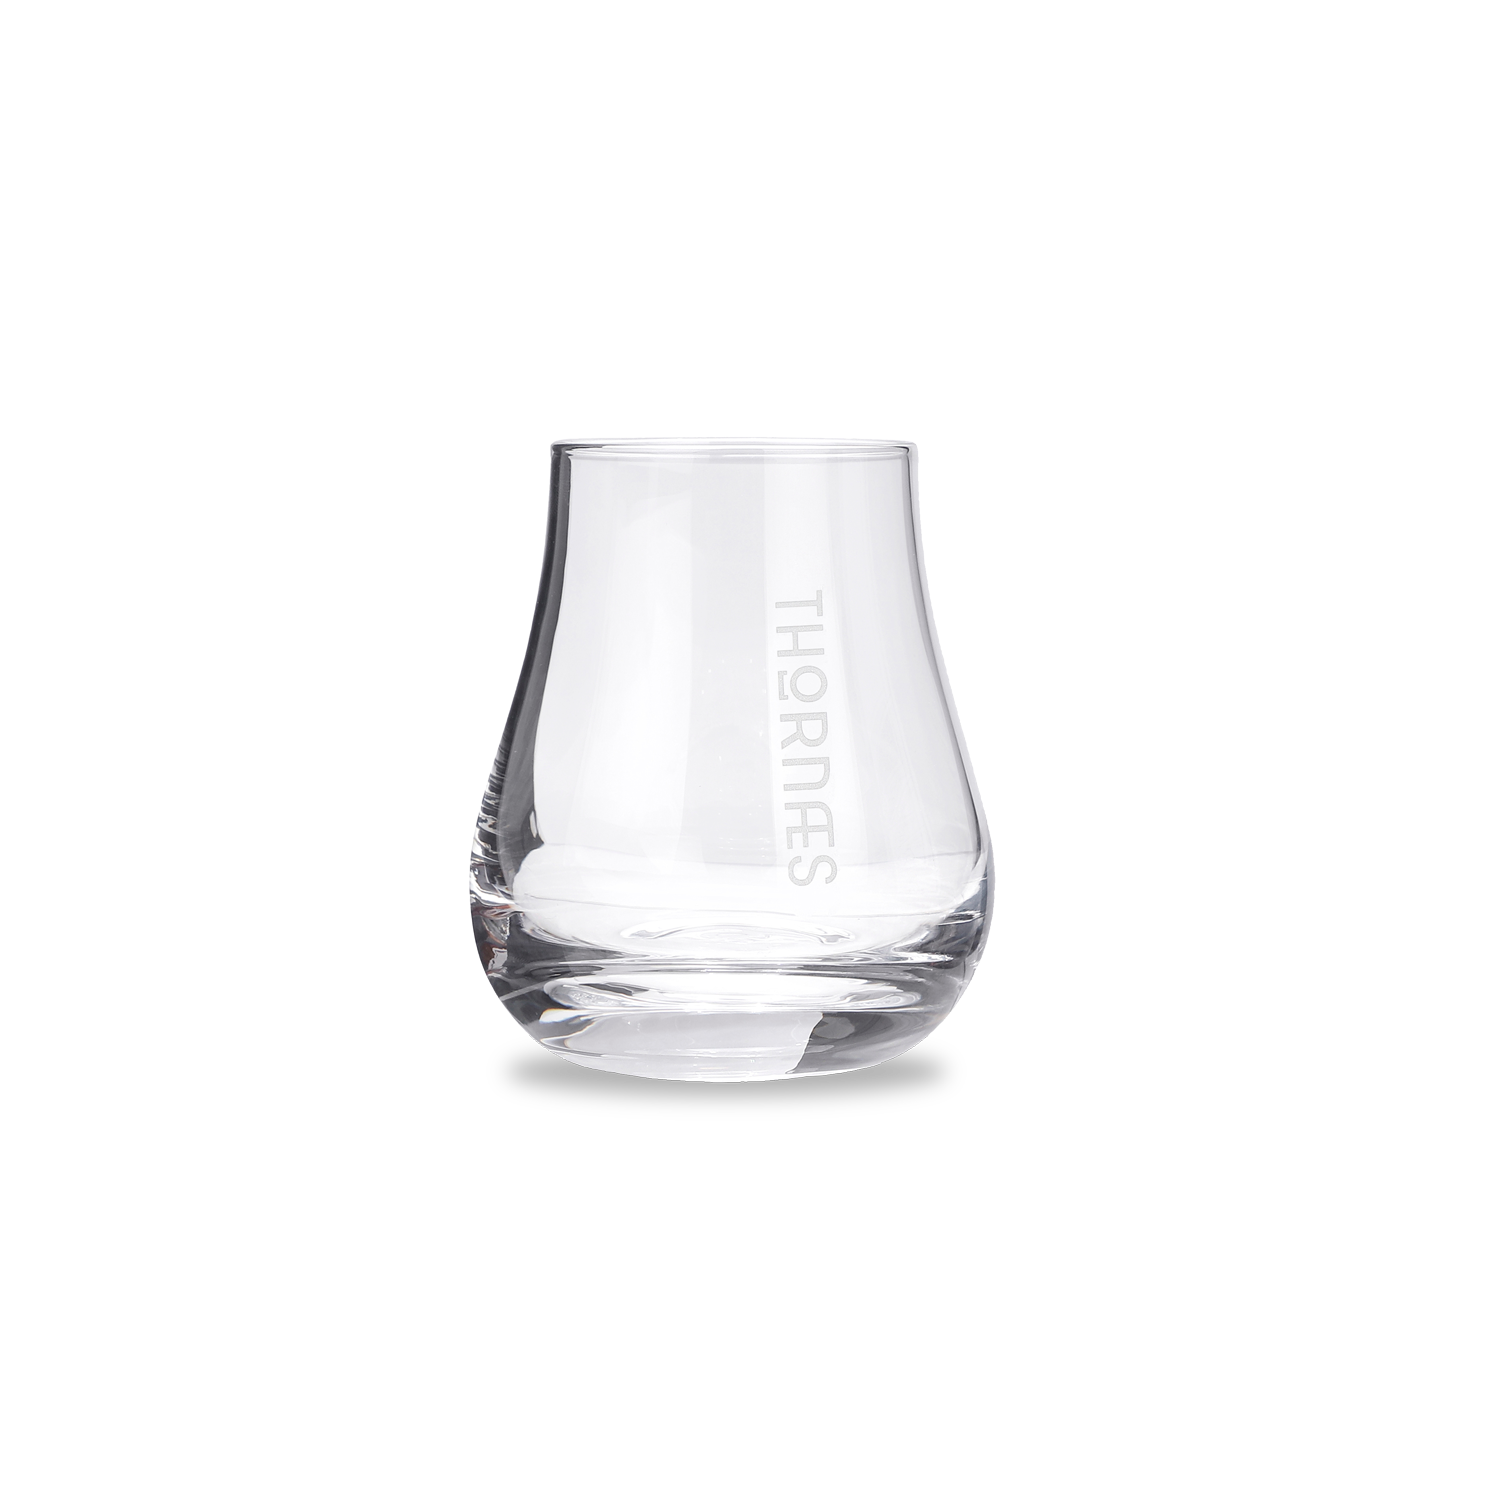 Urban Spey whiskyglas m. Thornæs logo